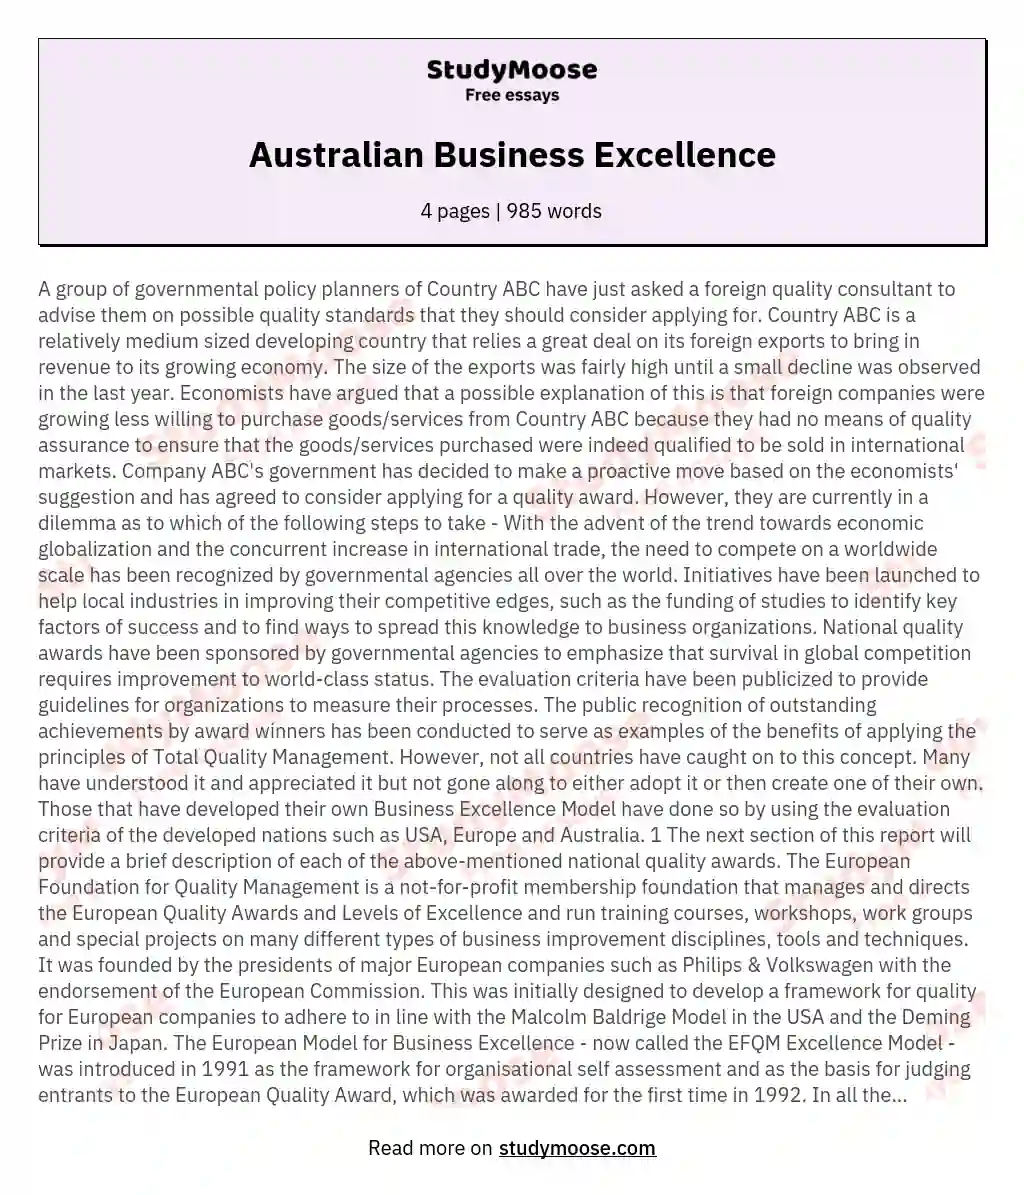 Australian Business Excellence essay